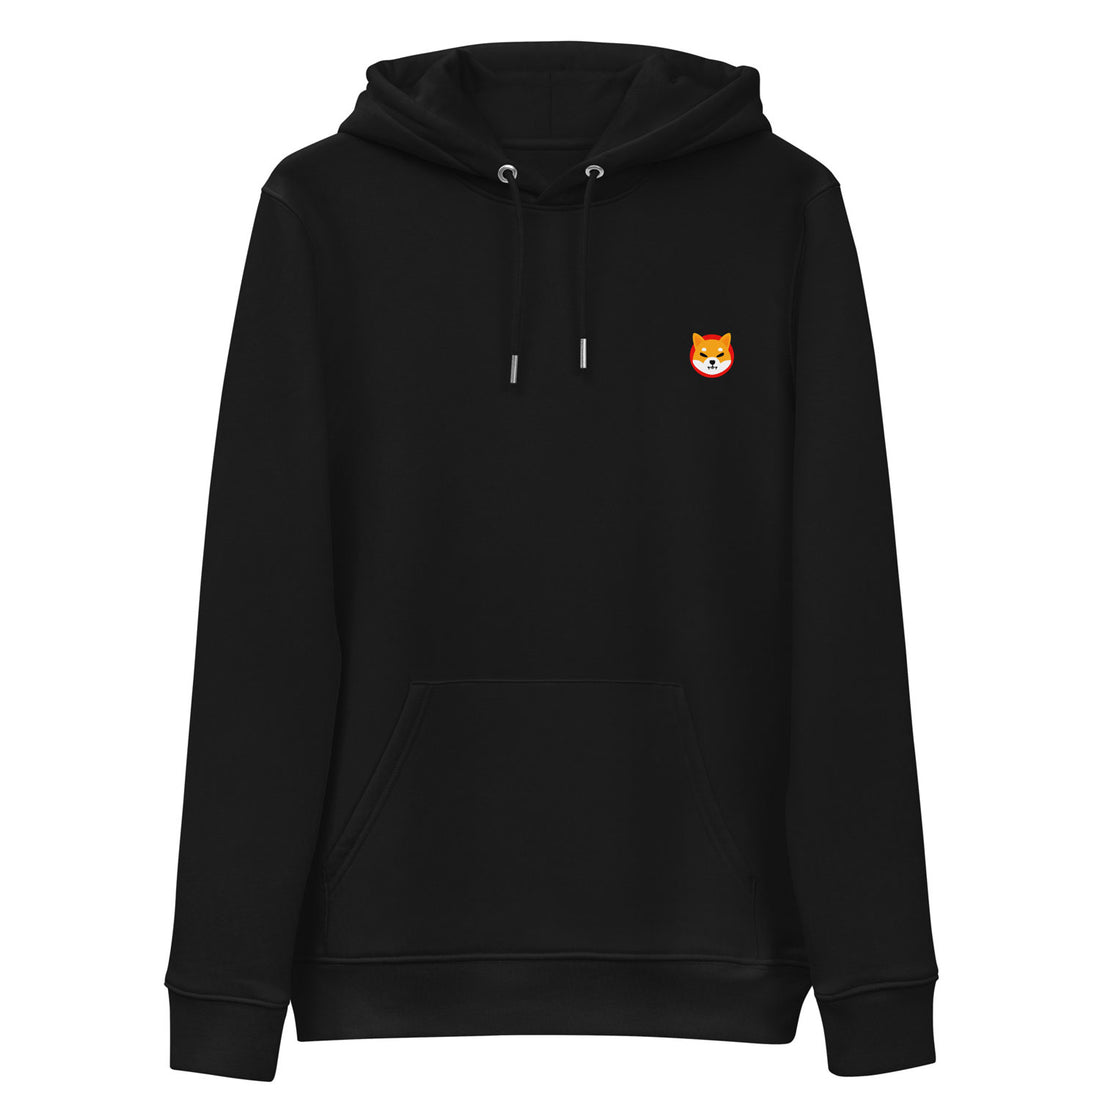 shiba inu logo hoodie black